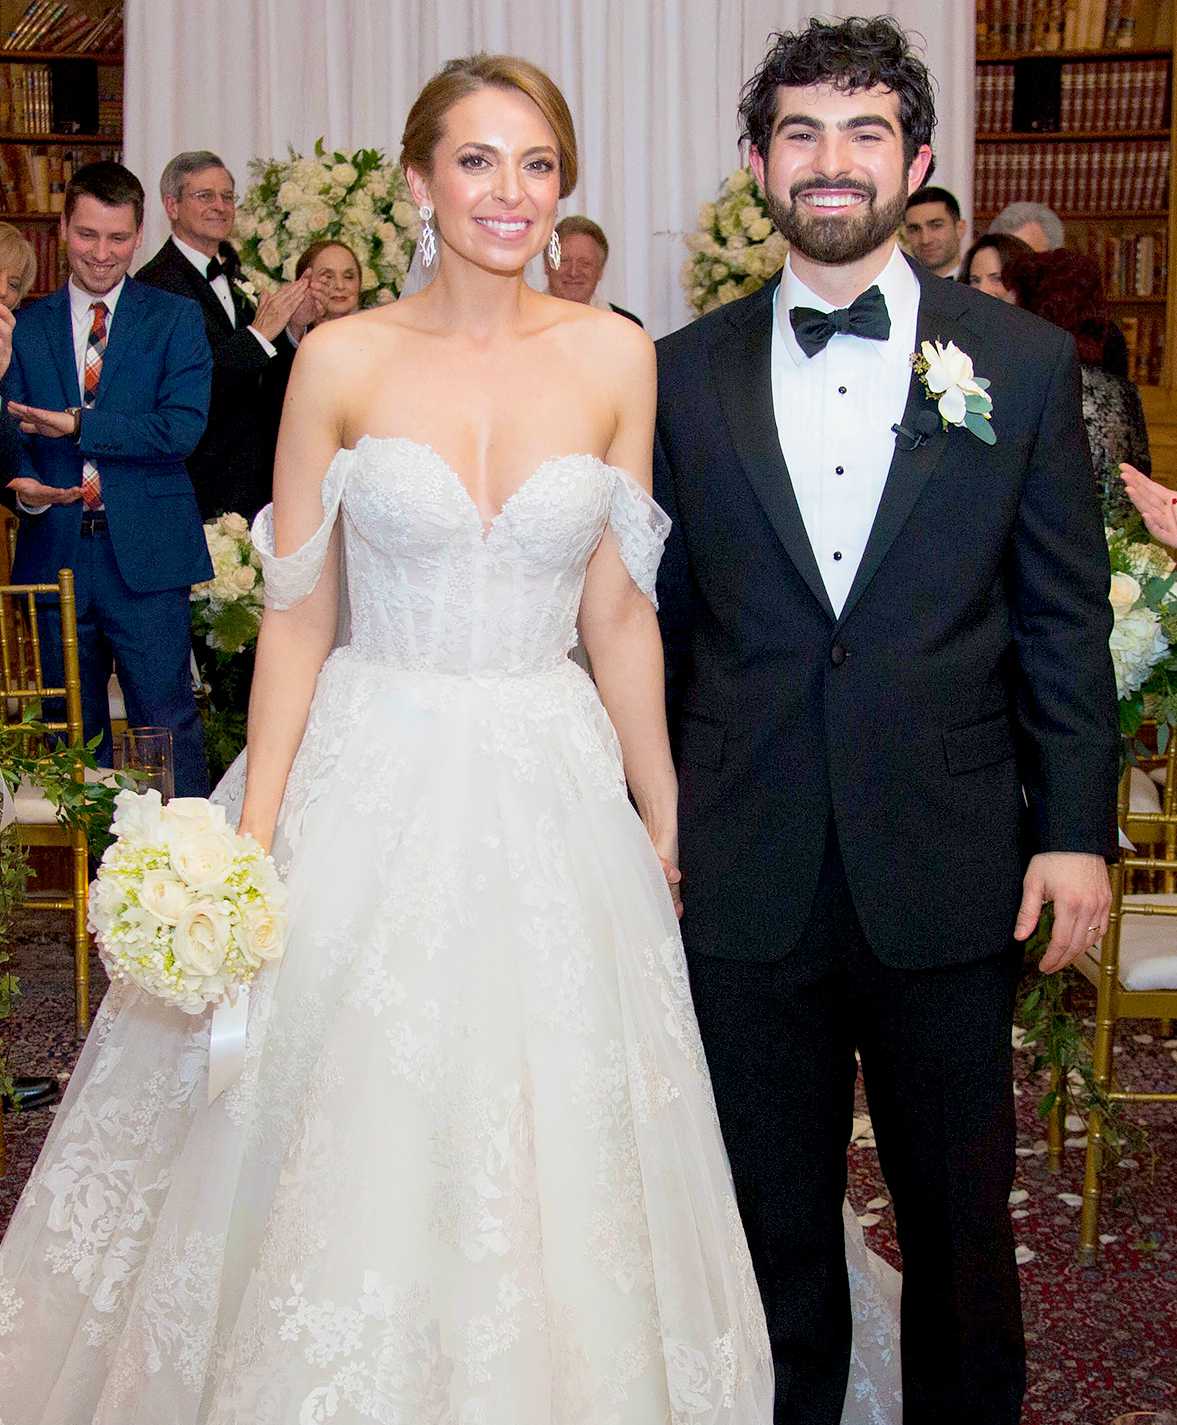 Jeremy Scher with his wife Jedediah in their wedding dress